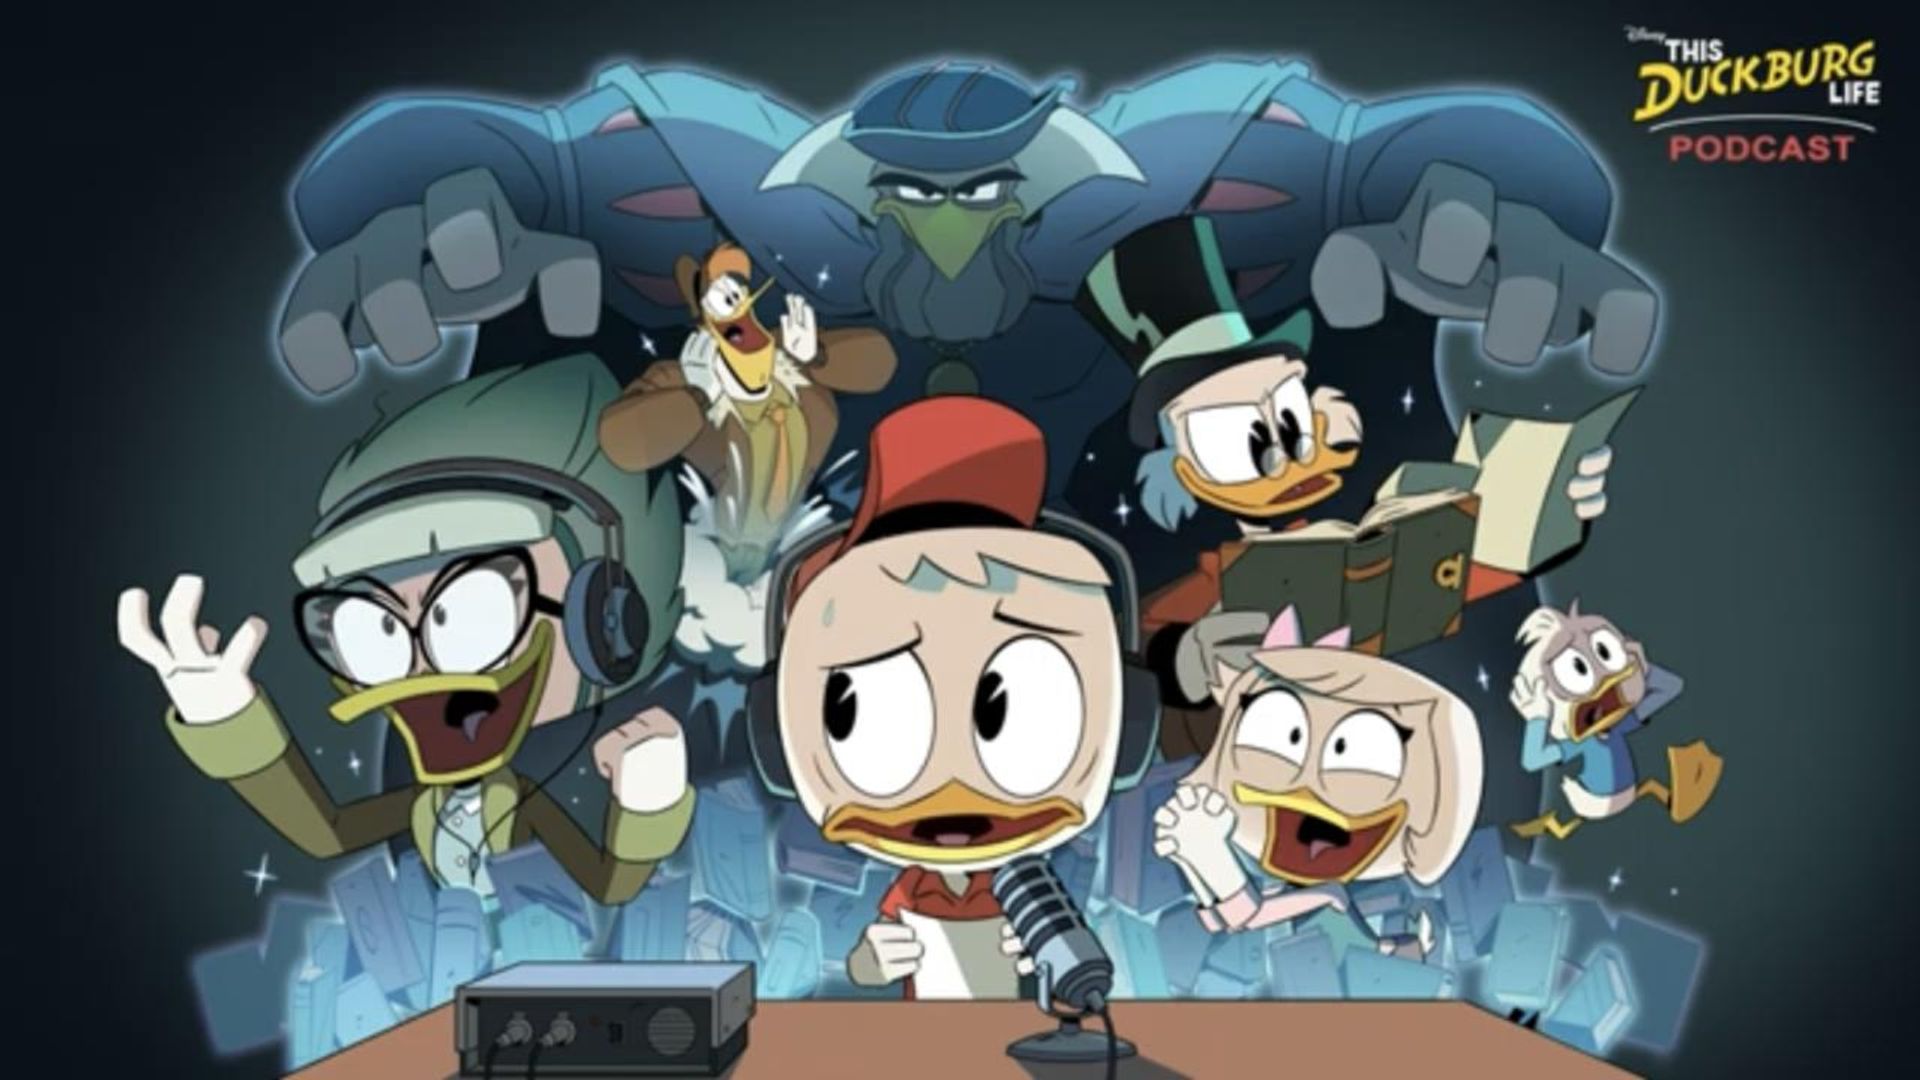 This Duckburg Life background